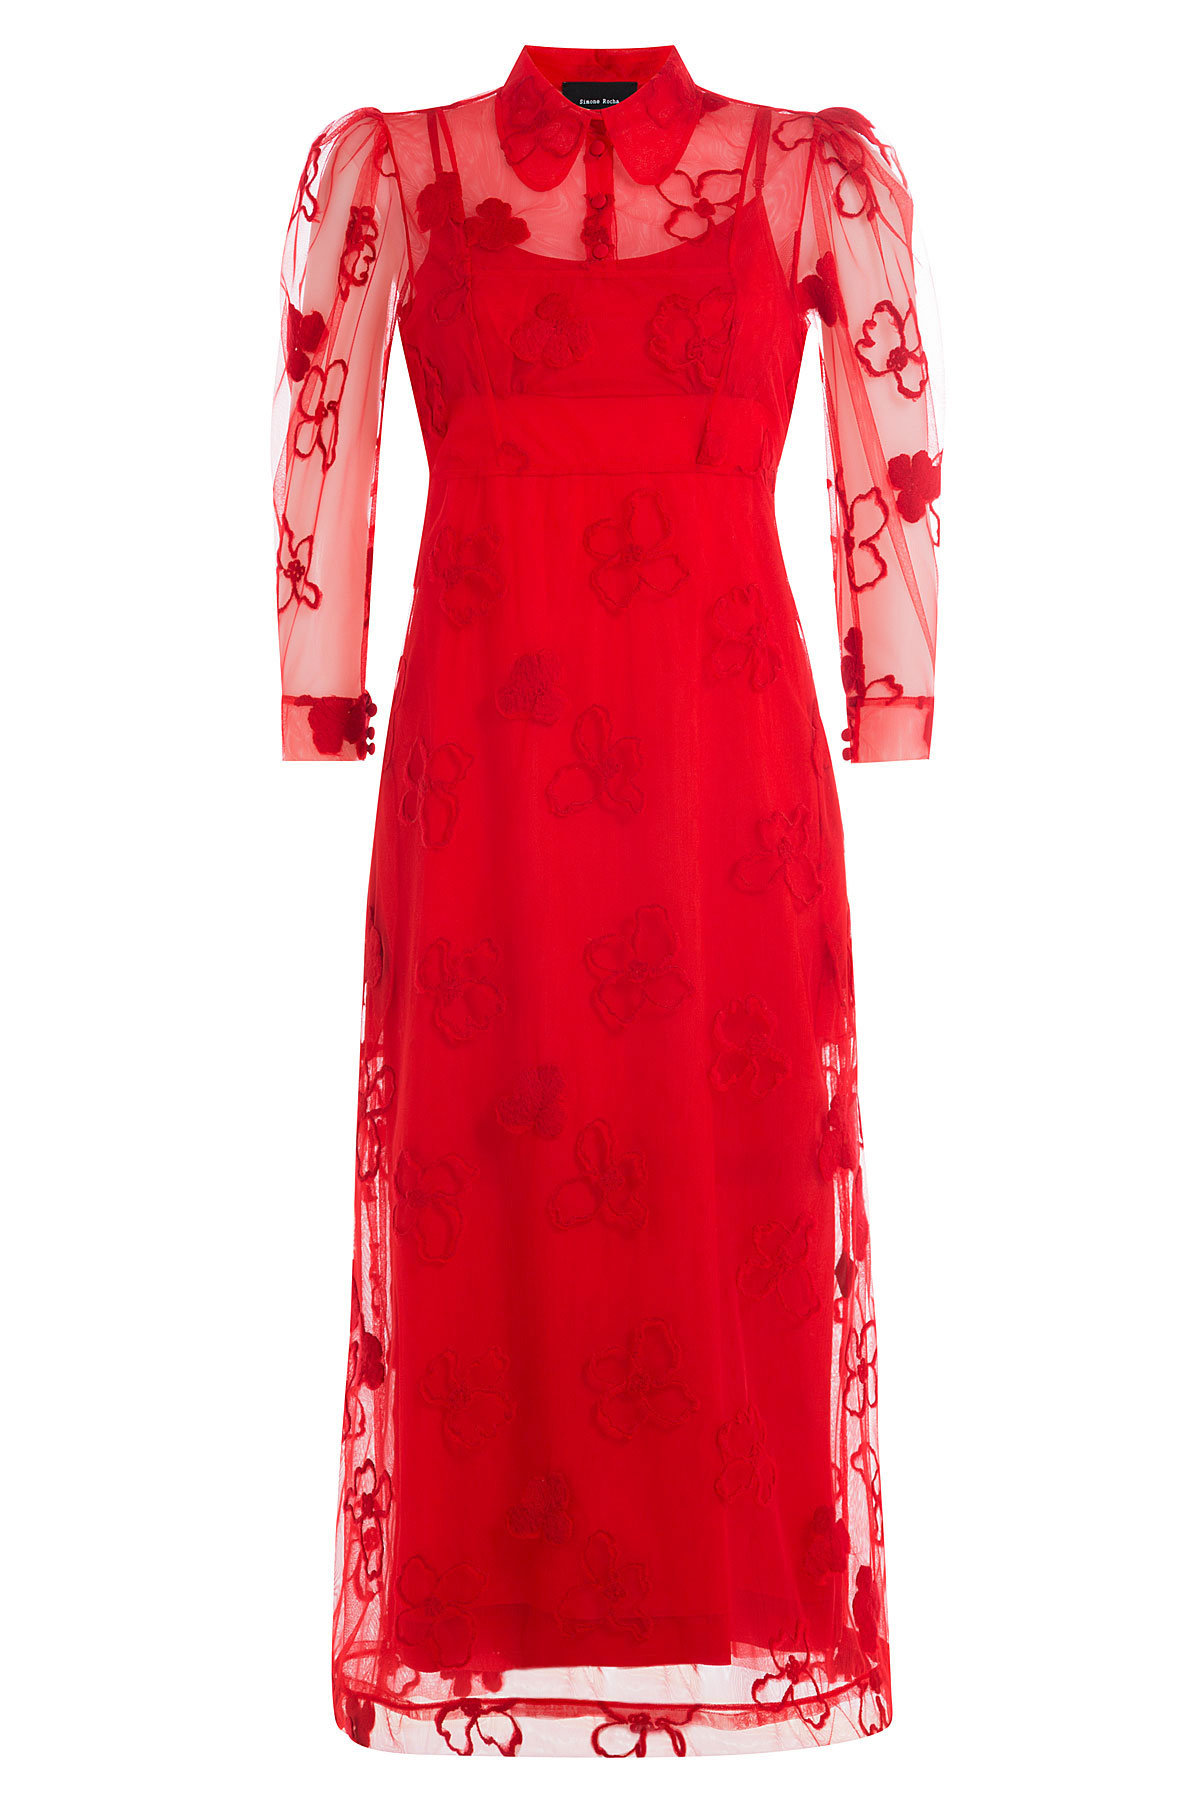 Simone Rocha - Dress with Sheer Floral Overlay